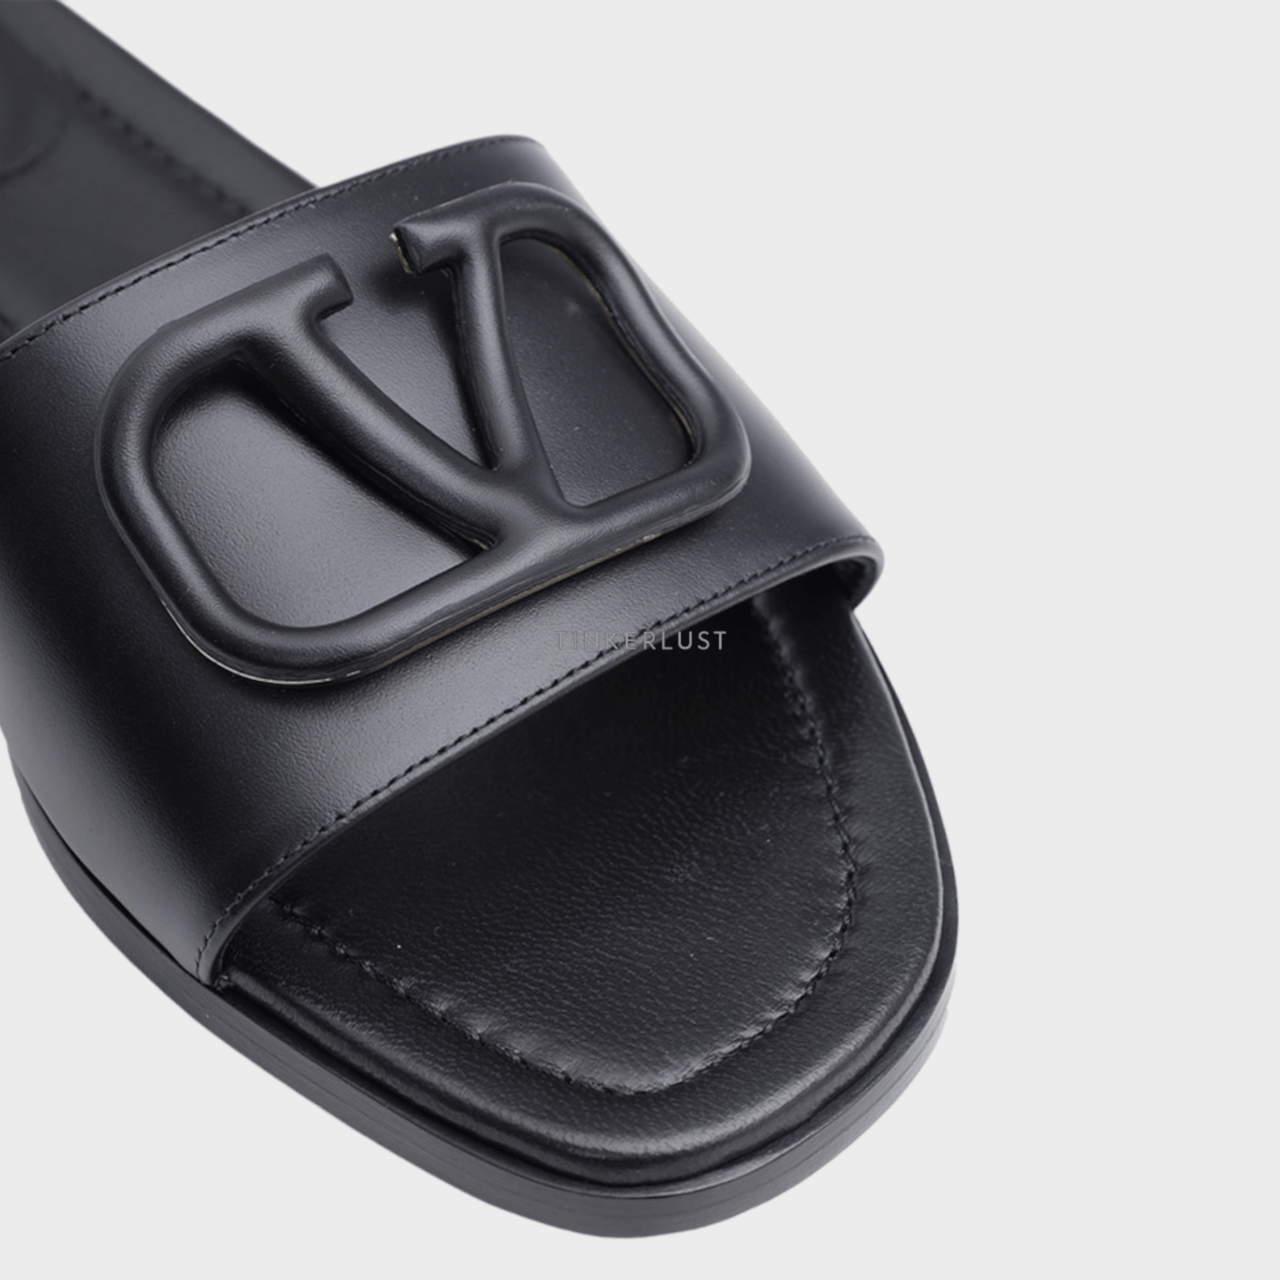 VALENTINO VLogo Signature Slides Sandals in All Black Calf